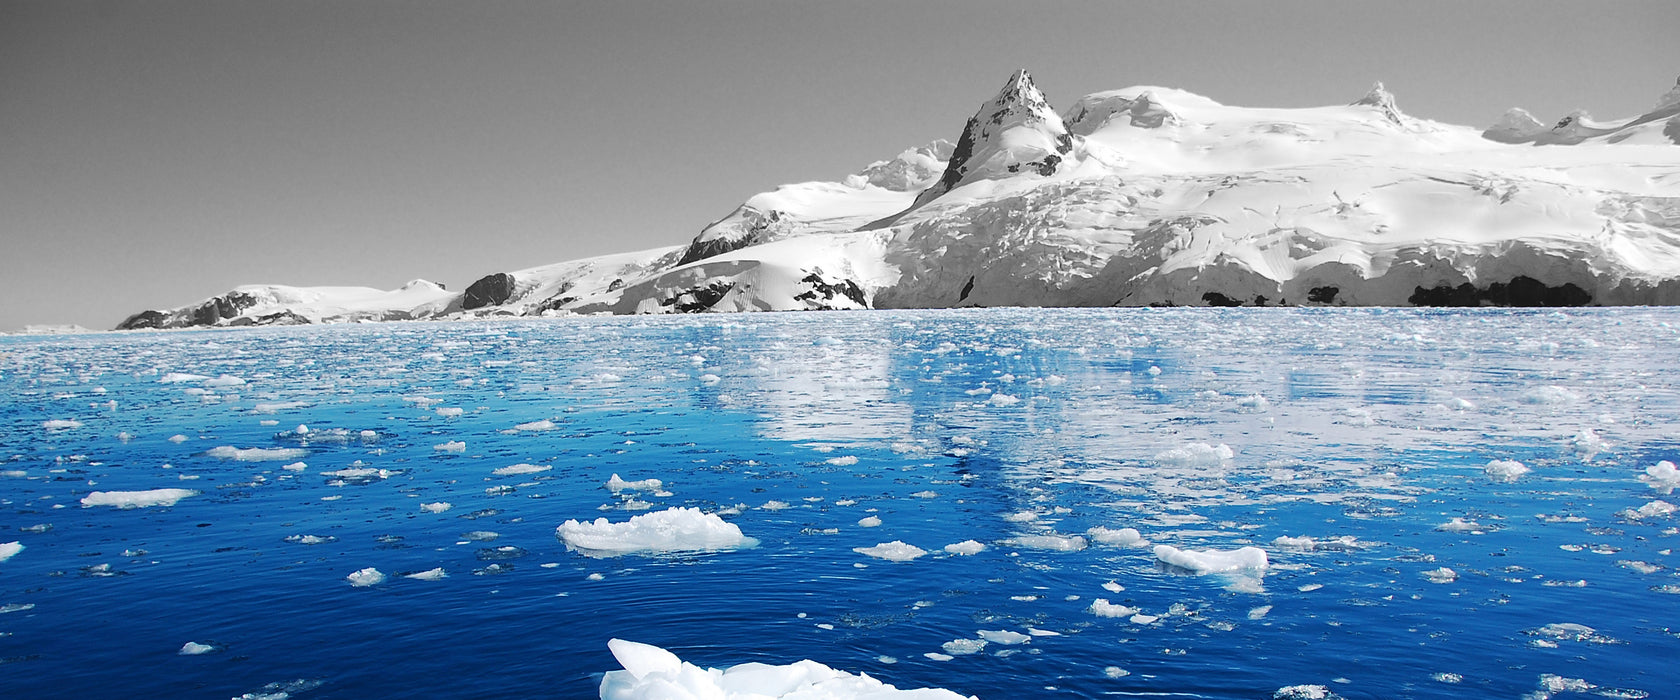 Eisbrocken im Meer, Glasbild Panorama